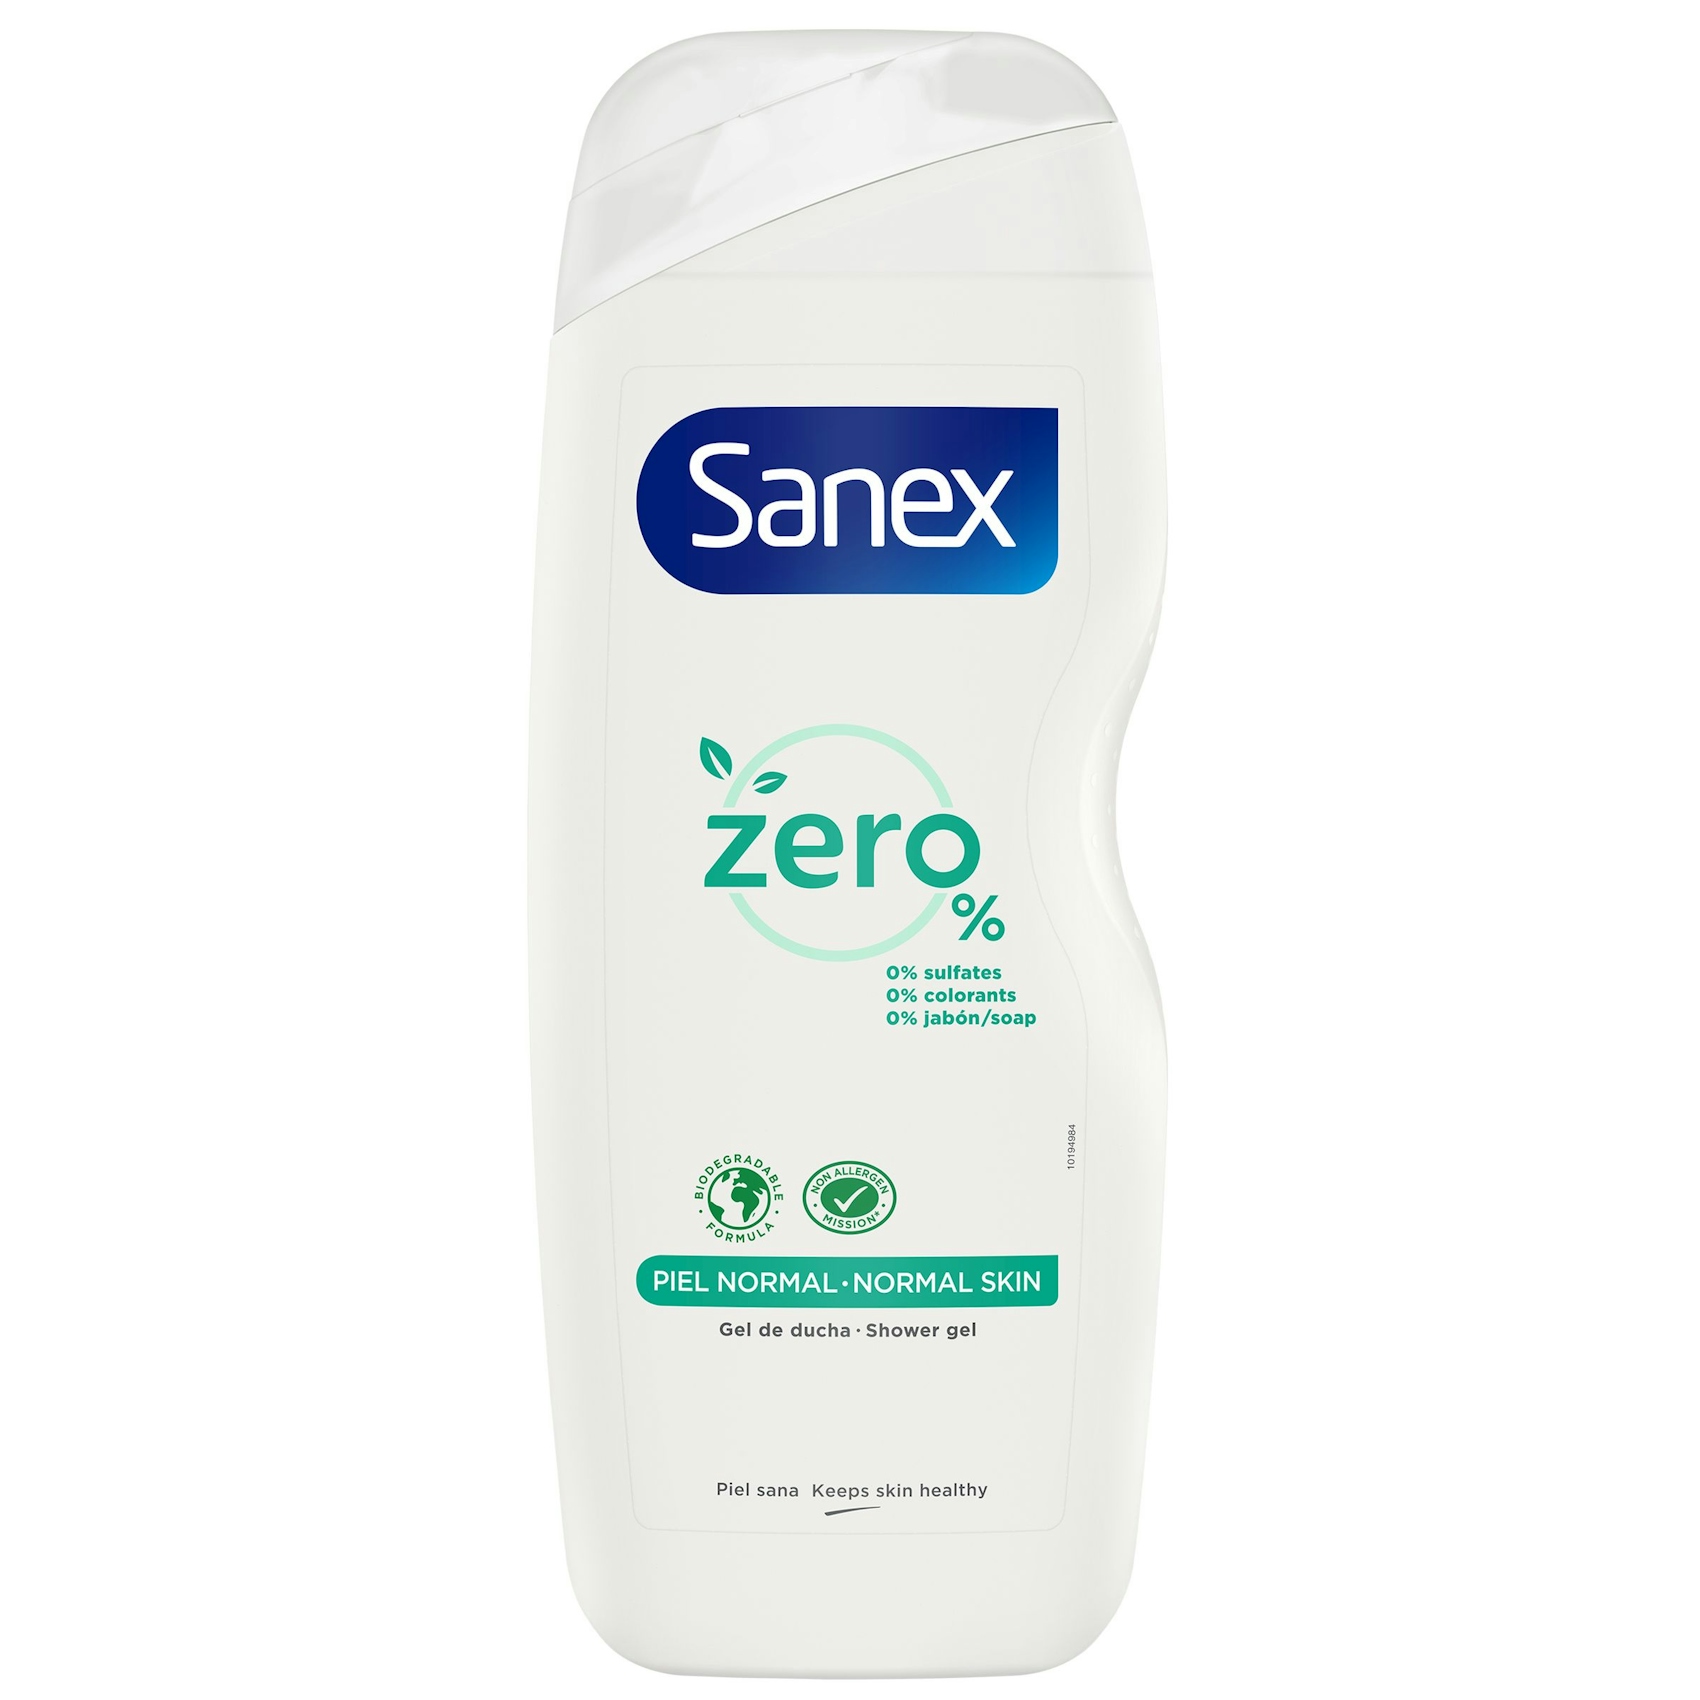 Gel de ducha SANEX zero % piel normal bote 550 ml